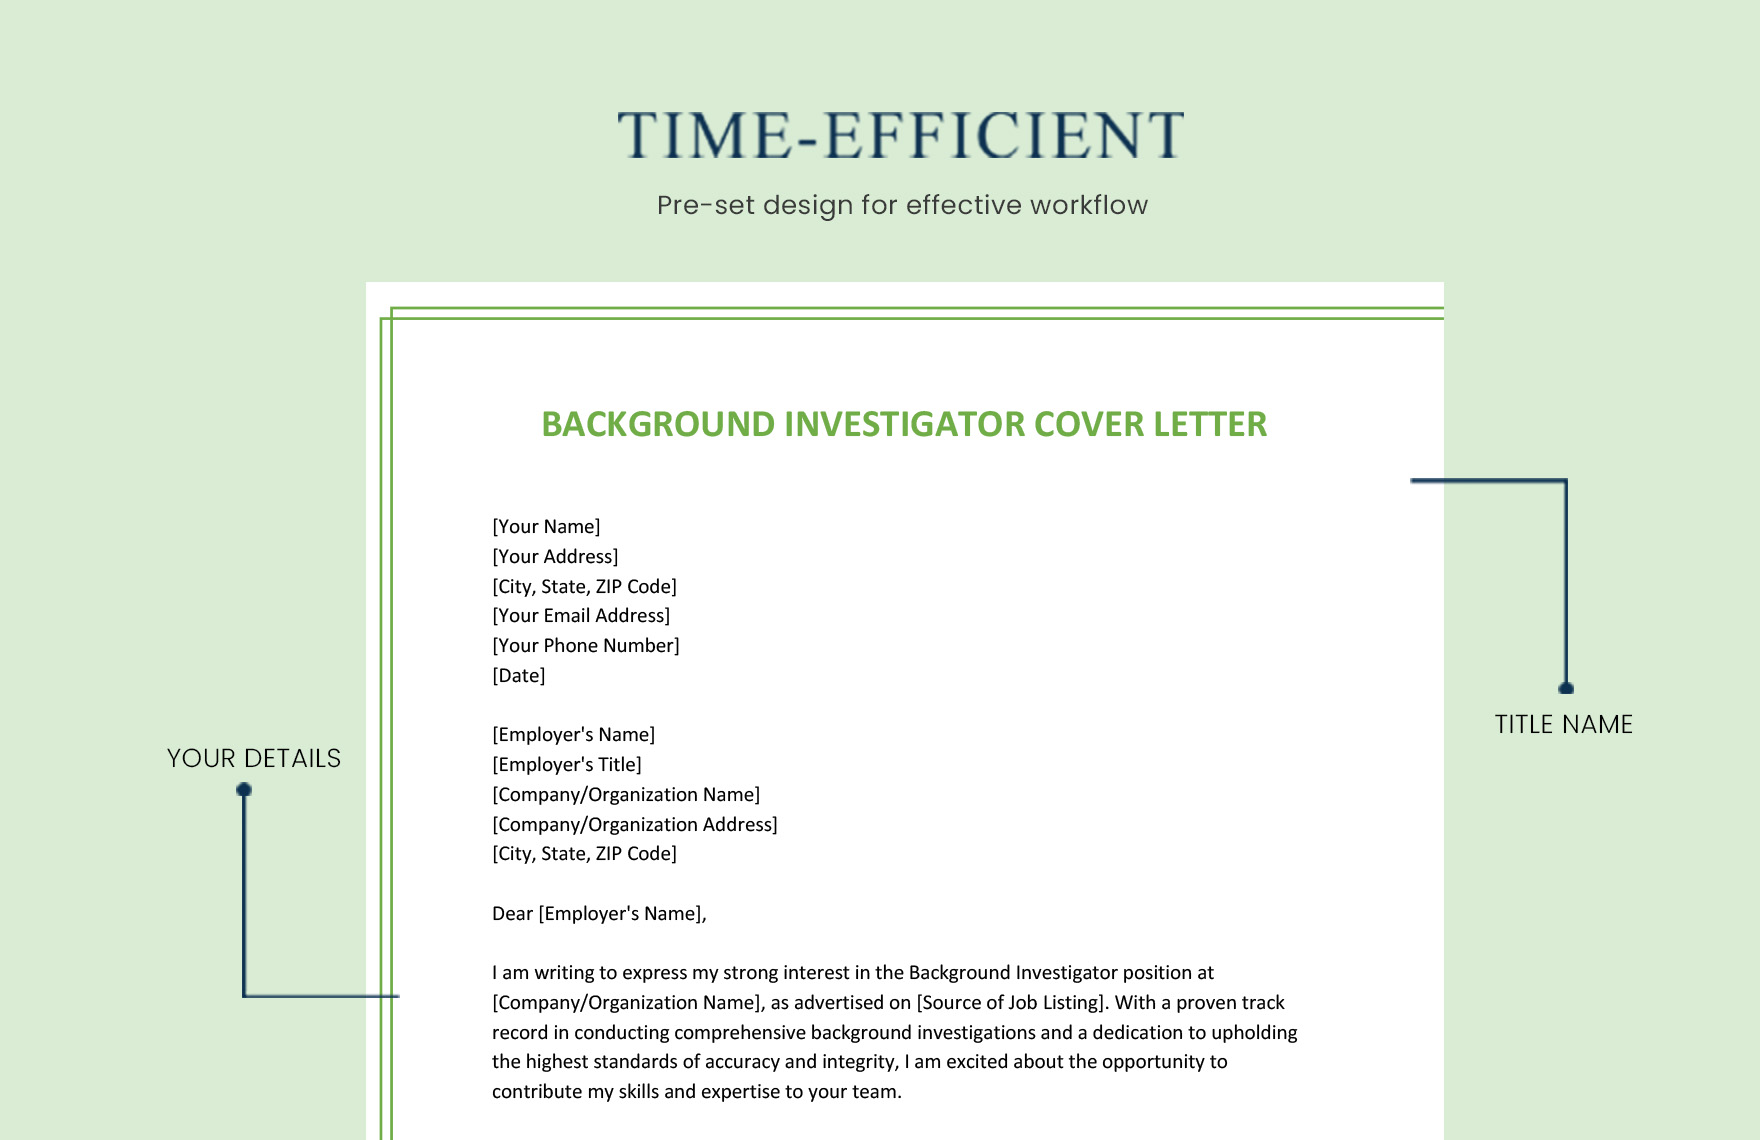 Background Investigator Cover Letter